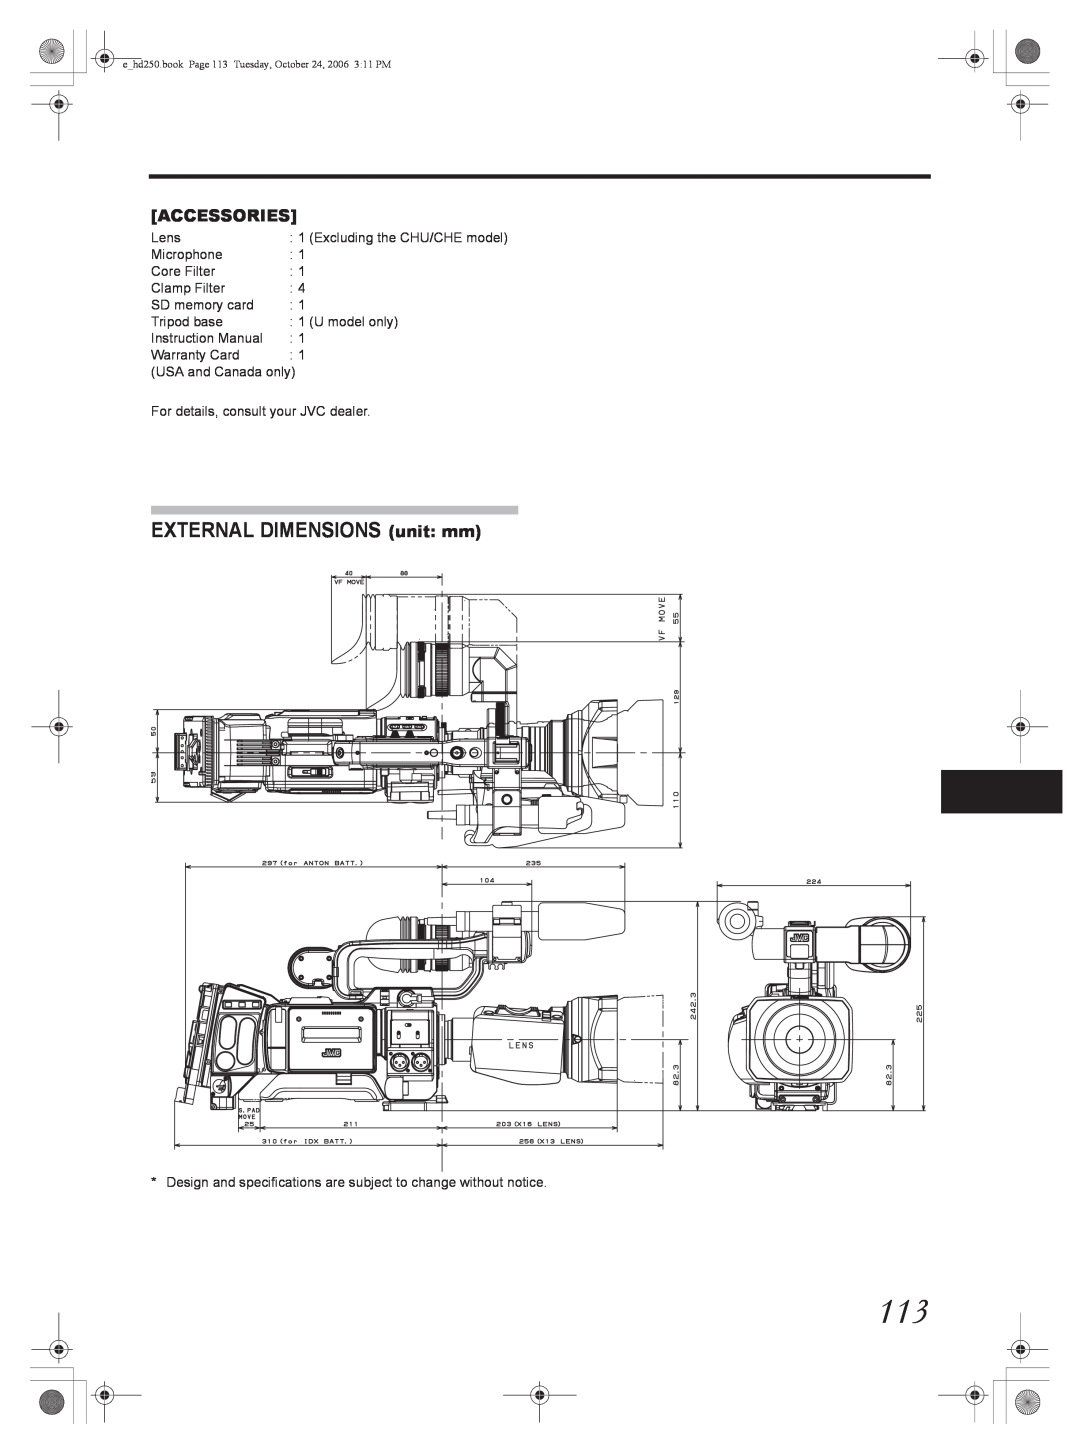 JVC GY-HD251, GY-HD250 manual EXTERNAL DIMENSIONS unit mm, Accessories 